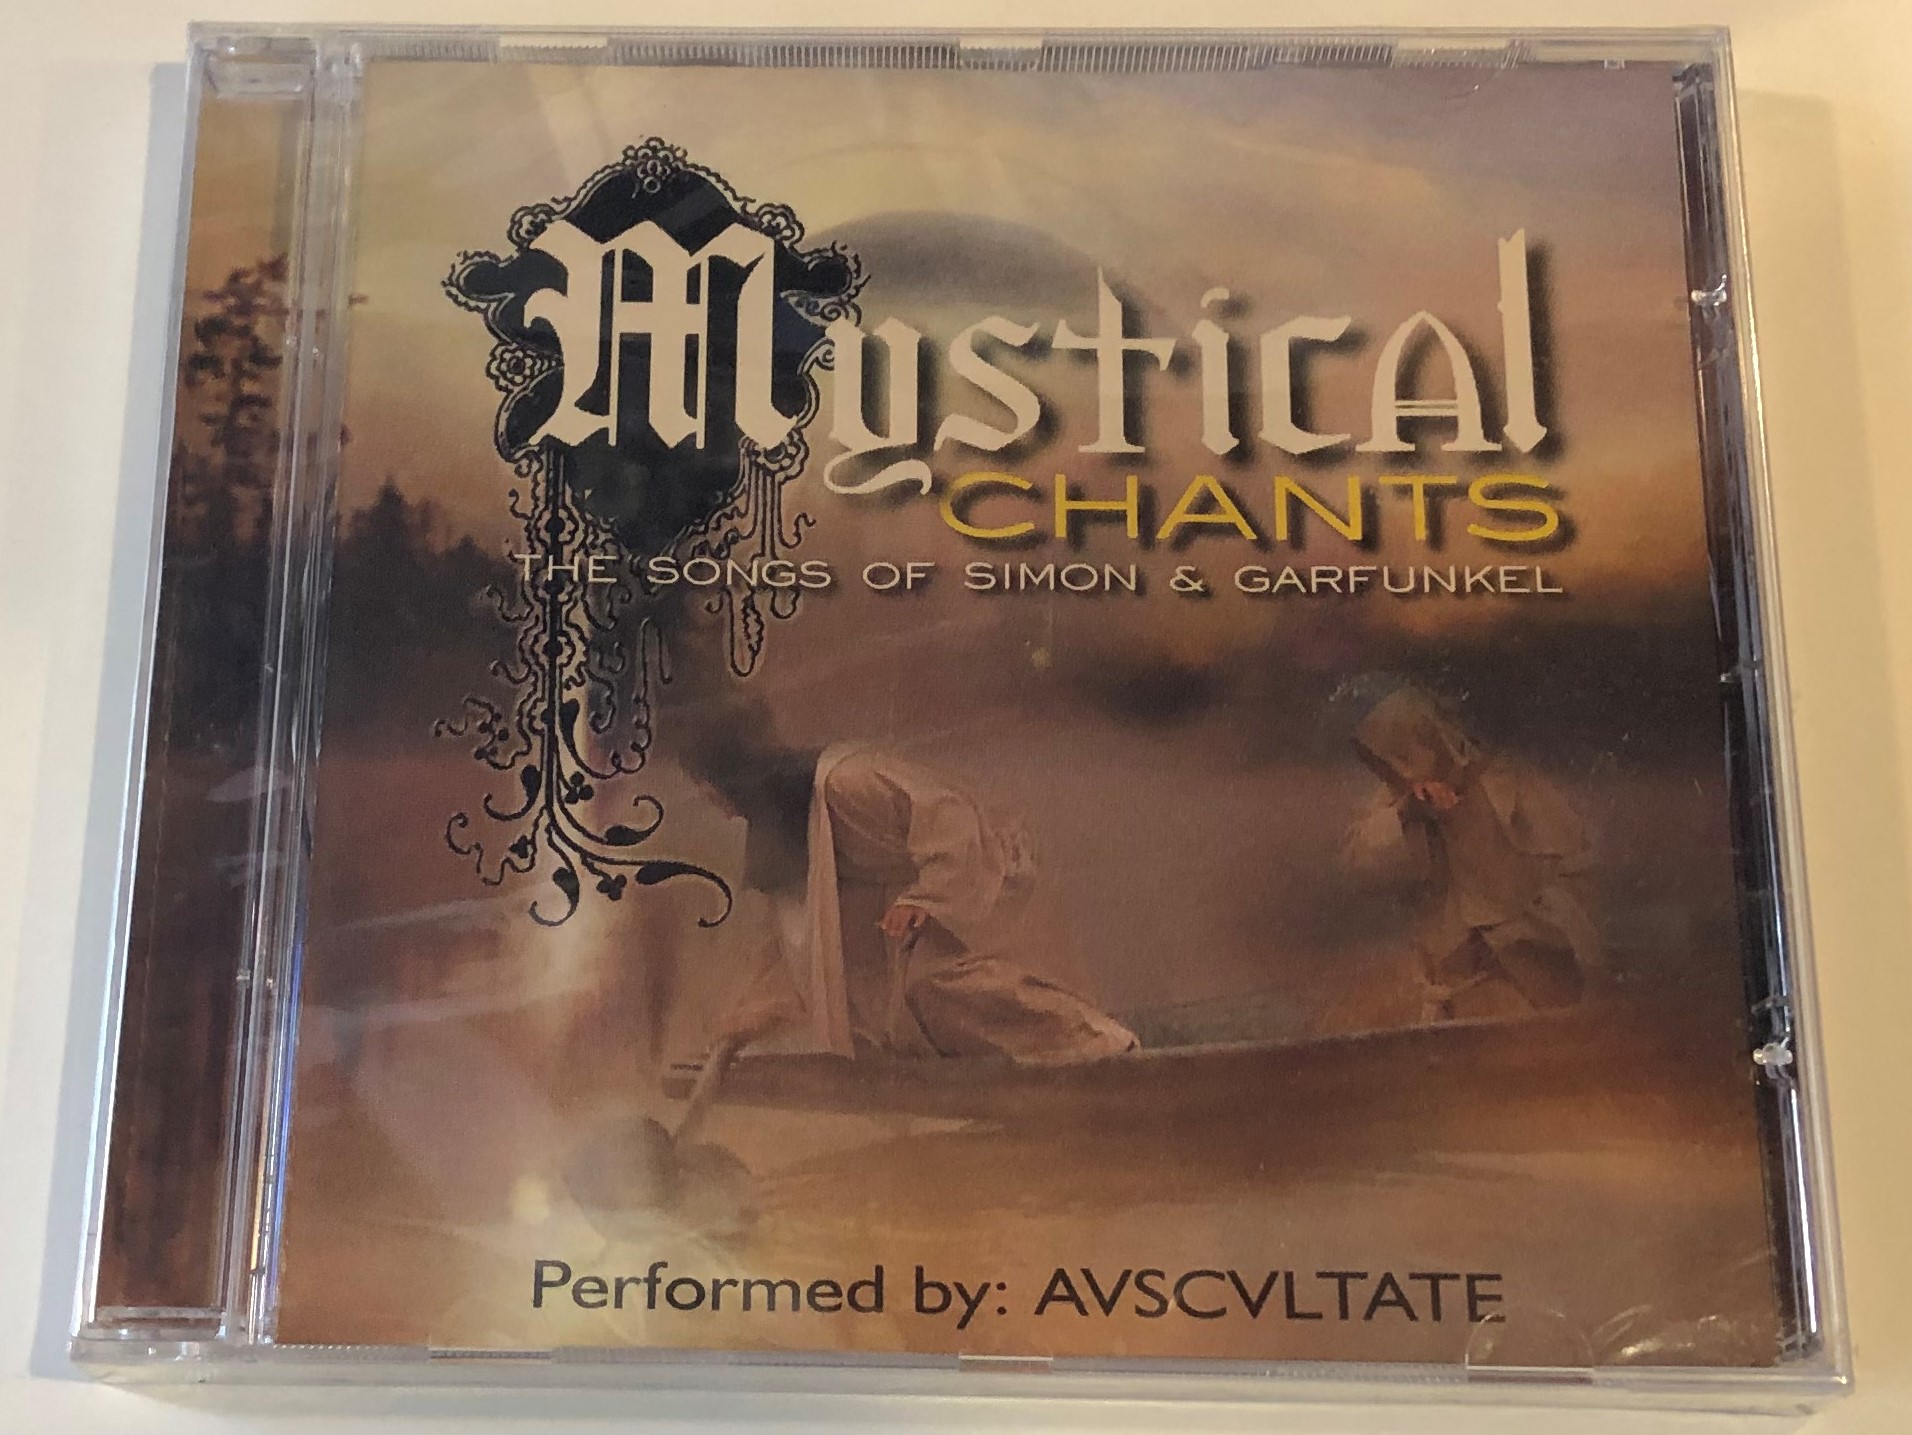 mystical-chants-the-songs-of-simon-garfunkel-performed-by-avscvltate-elap-audio-cd-2001-5706238309346-1-.jpg